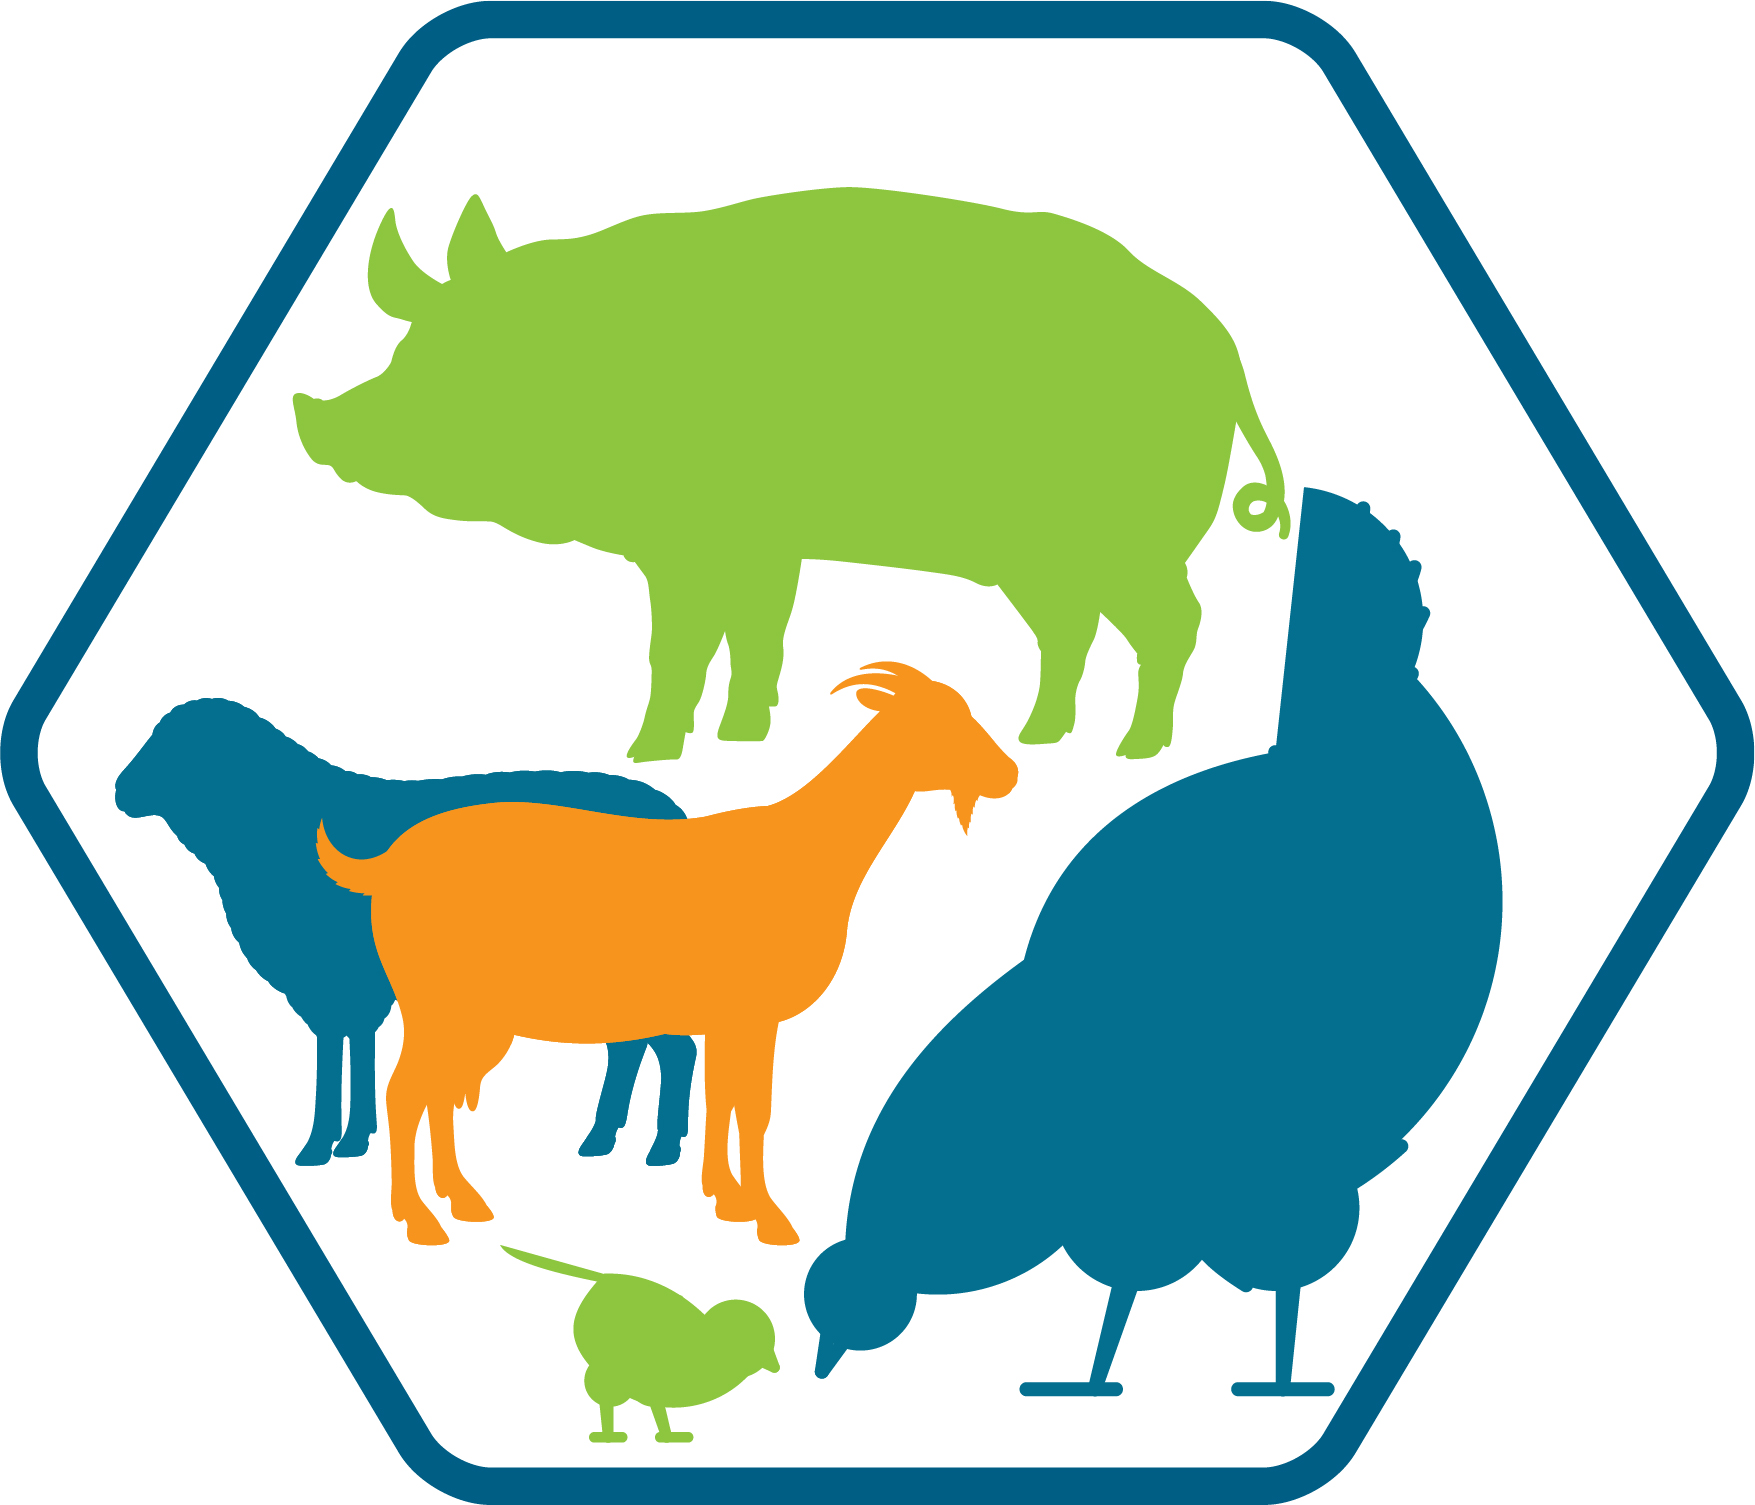 Symbol poultry, pigs, goats